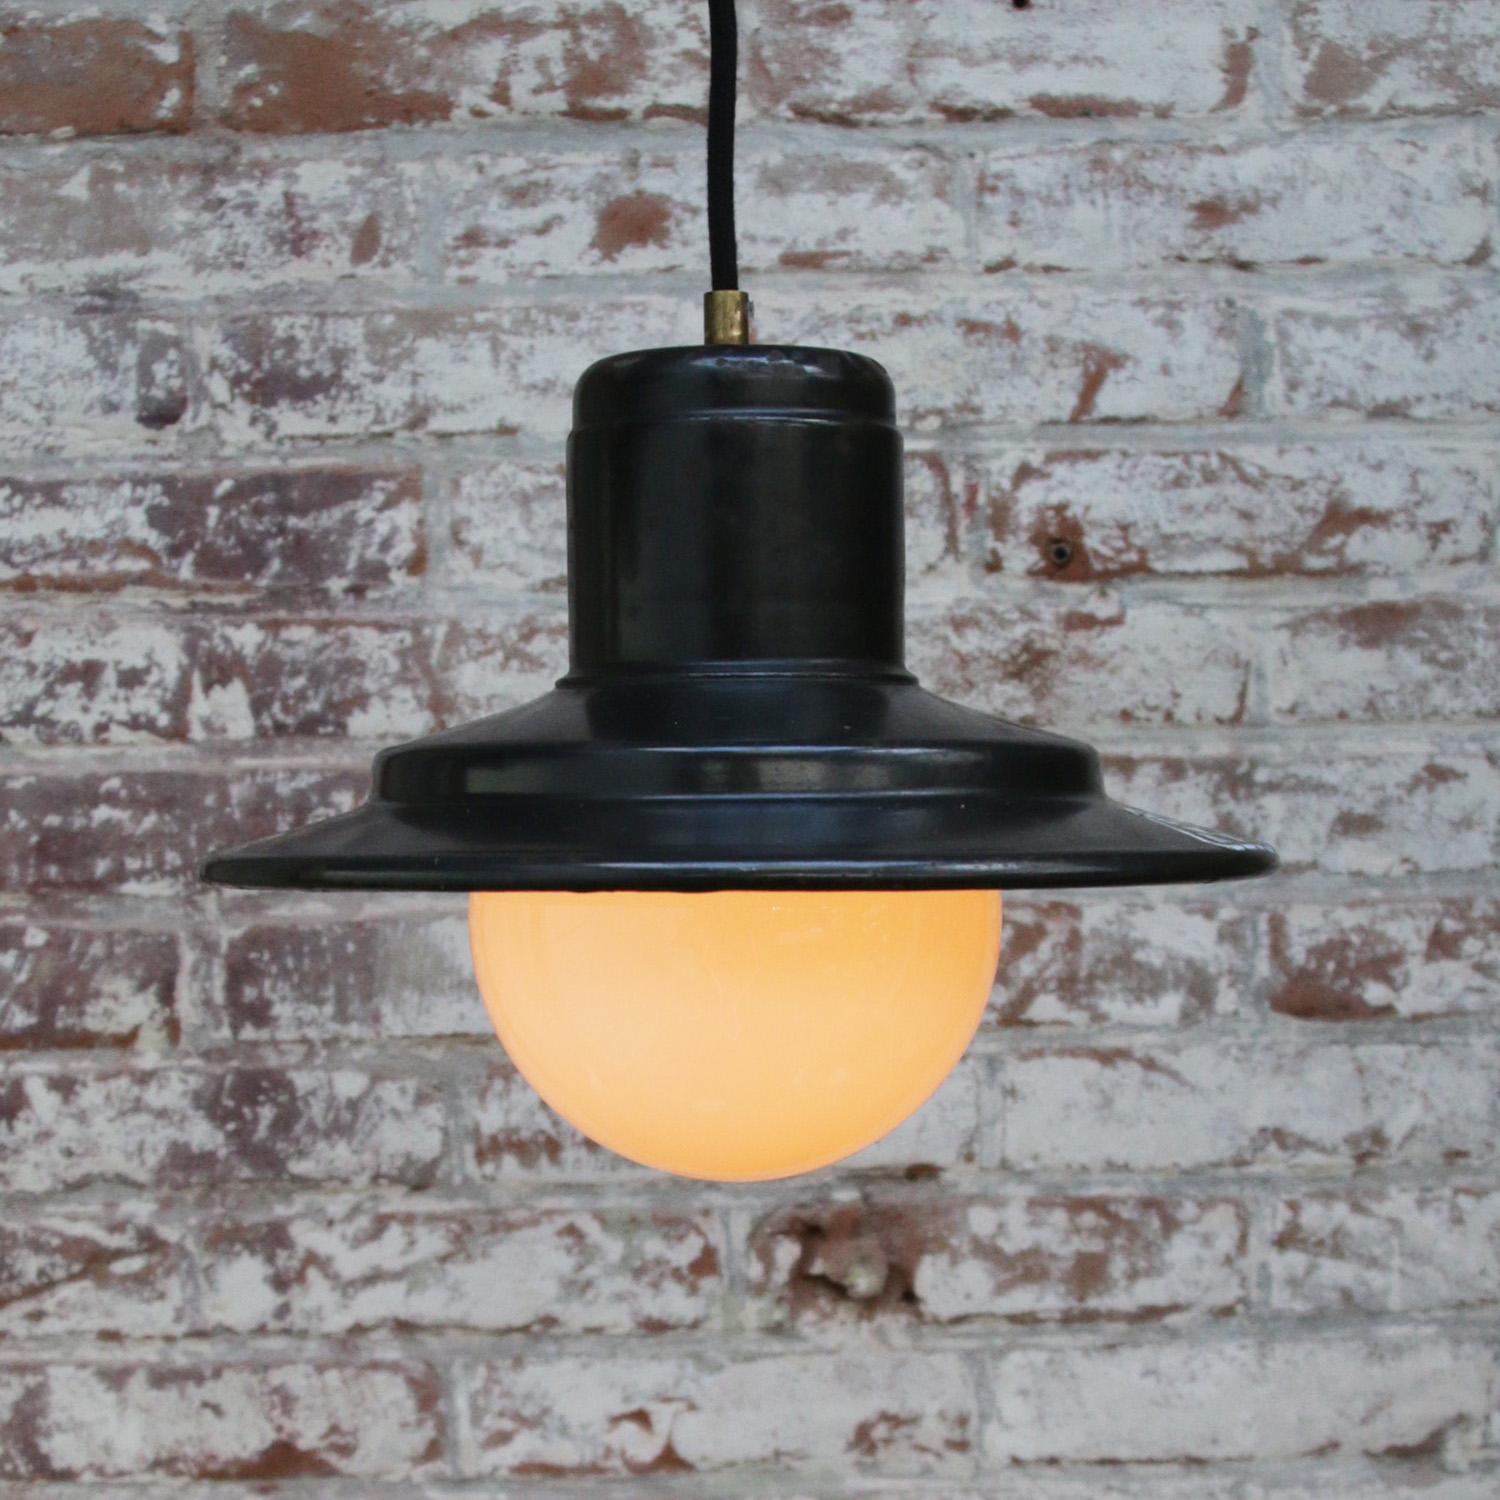 20th Century Black Enamel Vintage Industrial Opaline Glass Factory Hanging Light Pendant